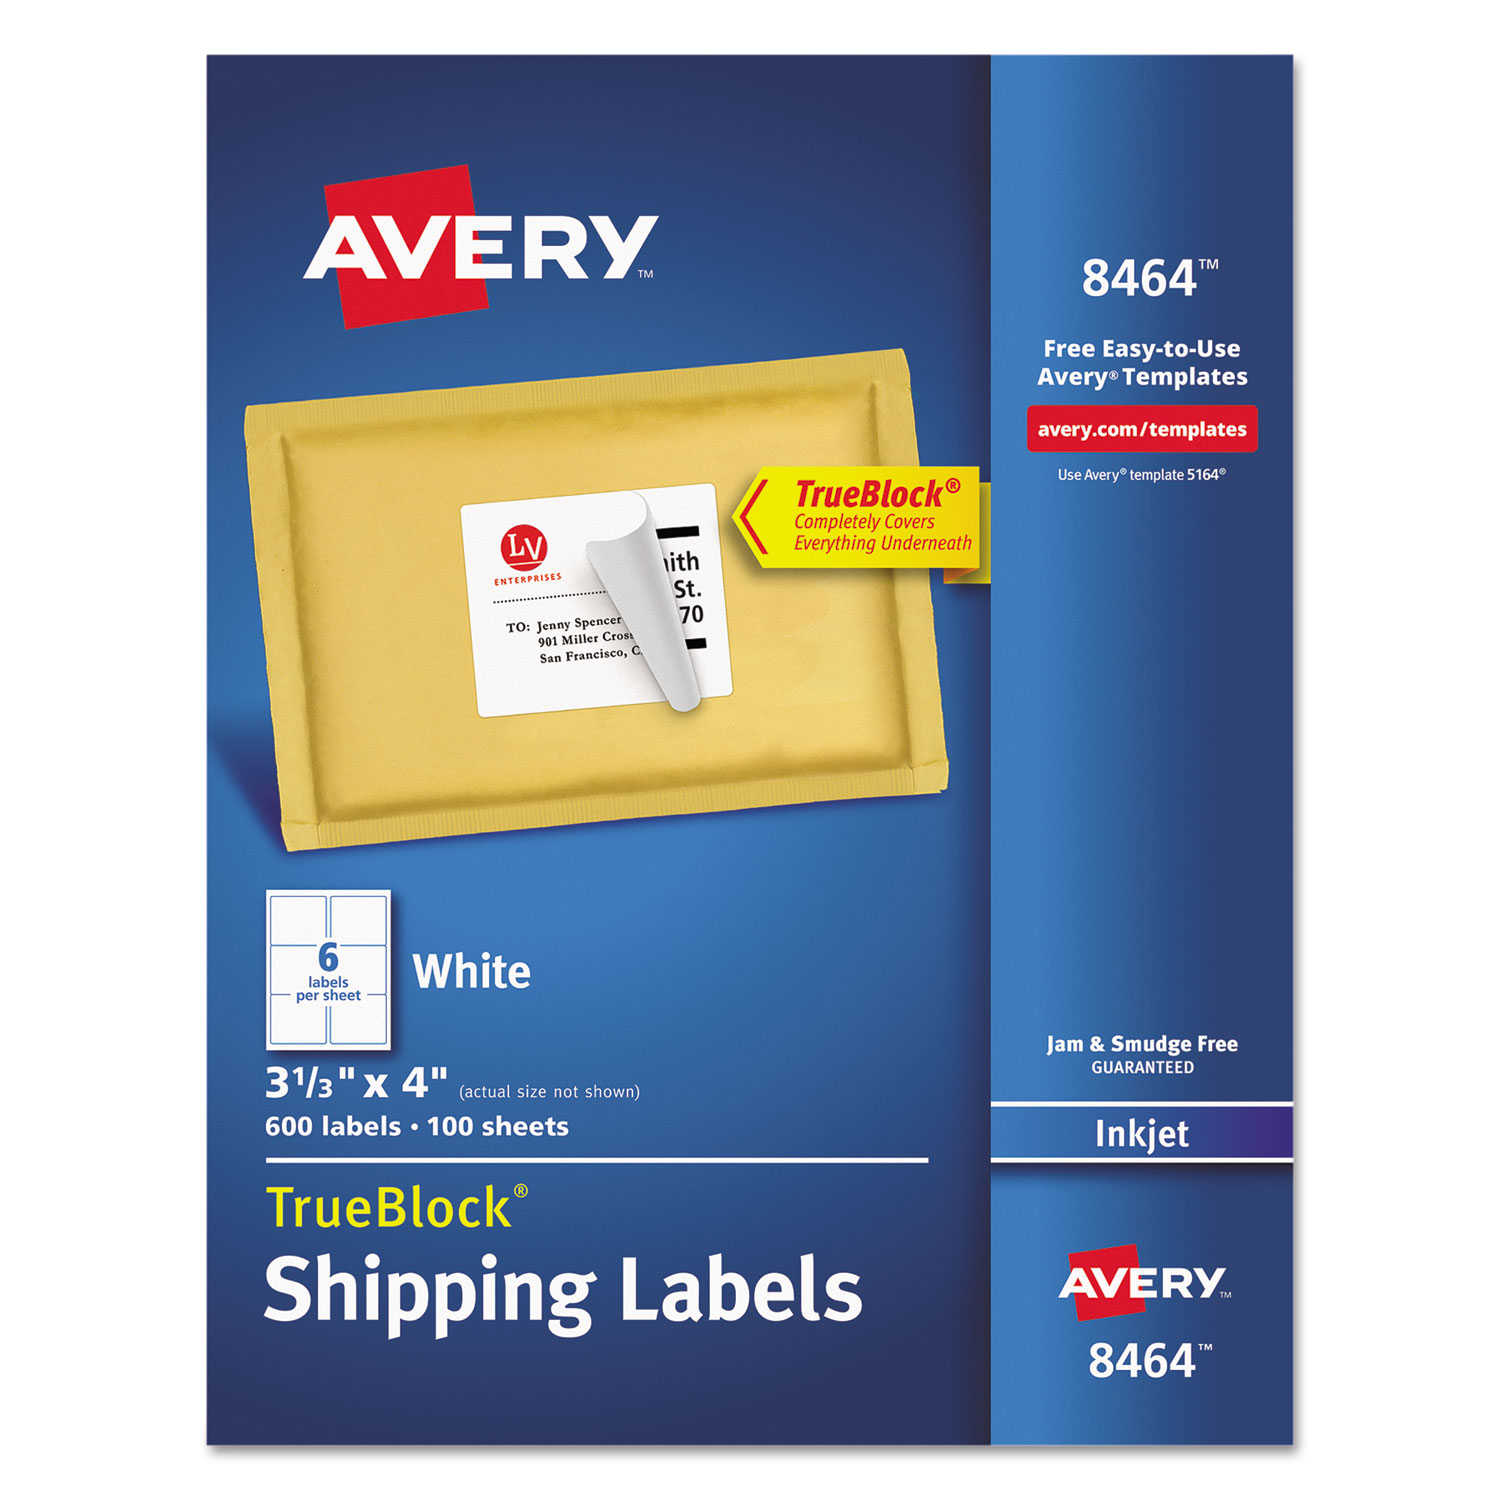  Avery 08464 Shipping Labels w/ TrueBlock Technology, Inkjet Printers, 3.33 x 4, White, 6/Sheet, 100 Sheets/Box (AVE8464) 